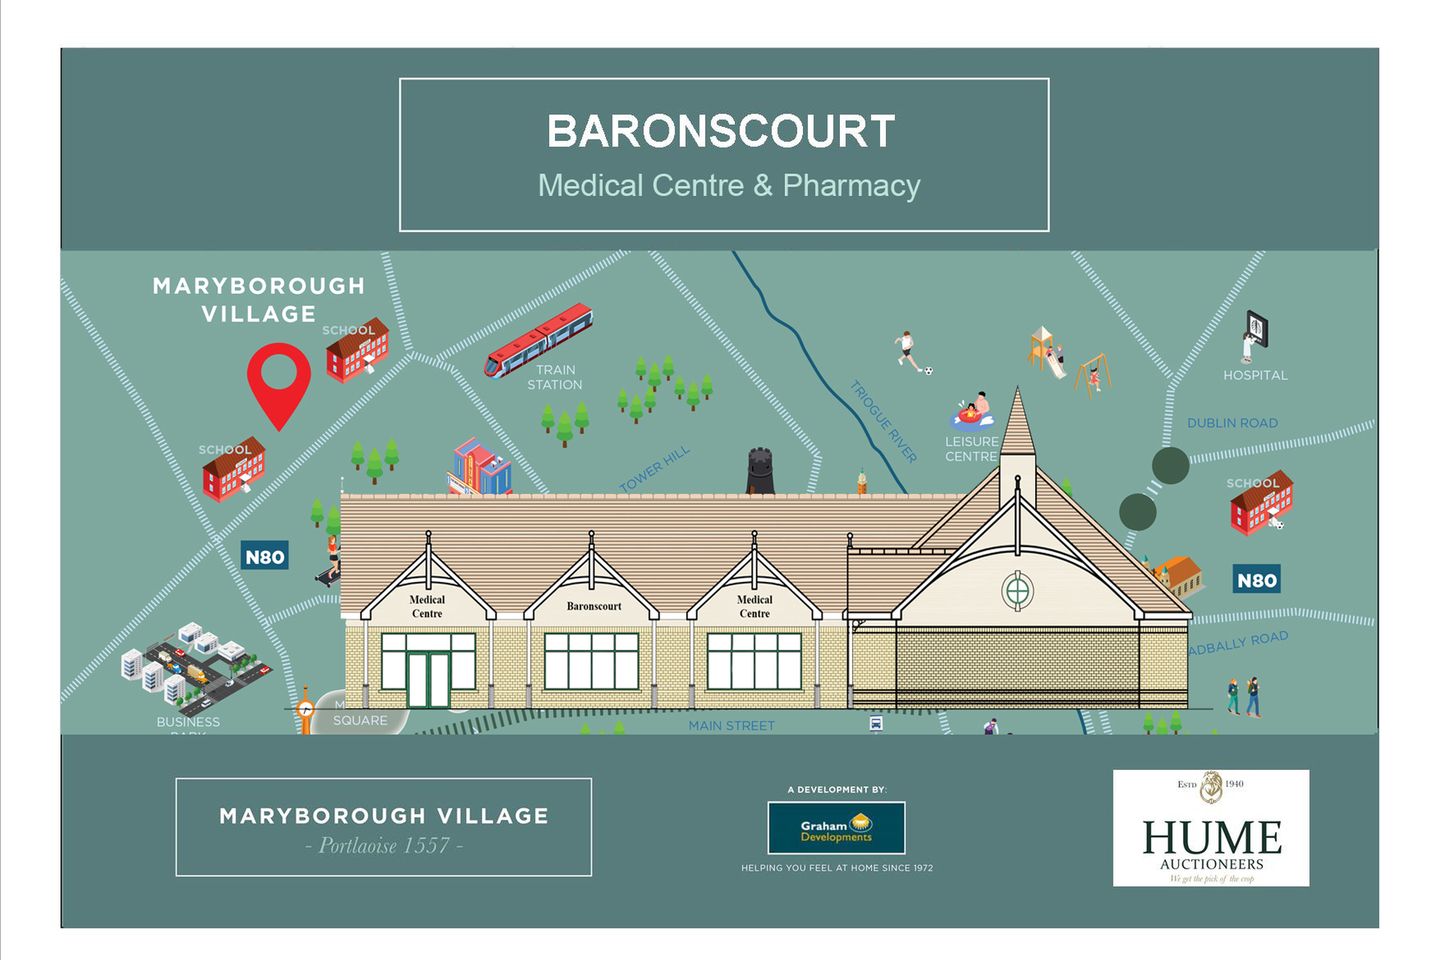 Baronscourt Medical Centre, Maryborough Village, Portlaoise, Co. Laois